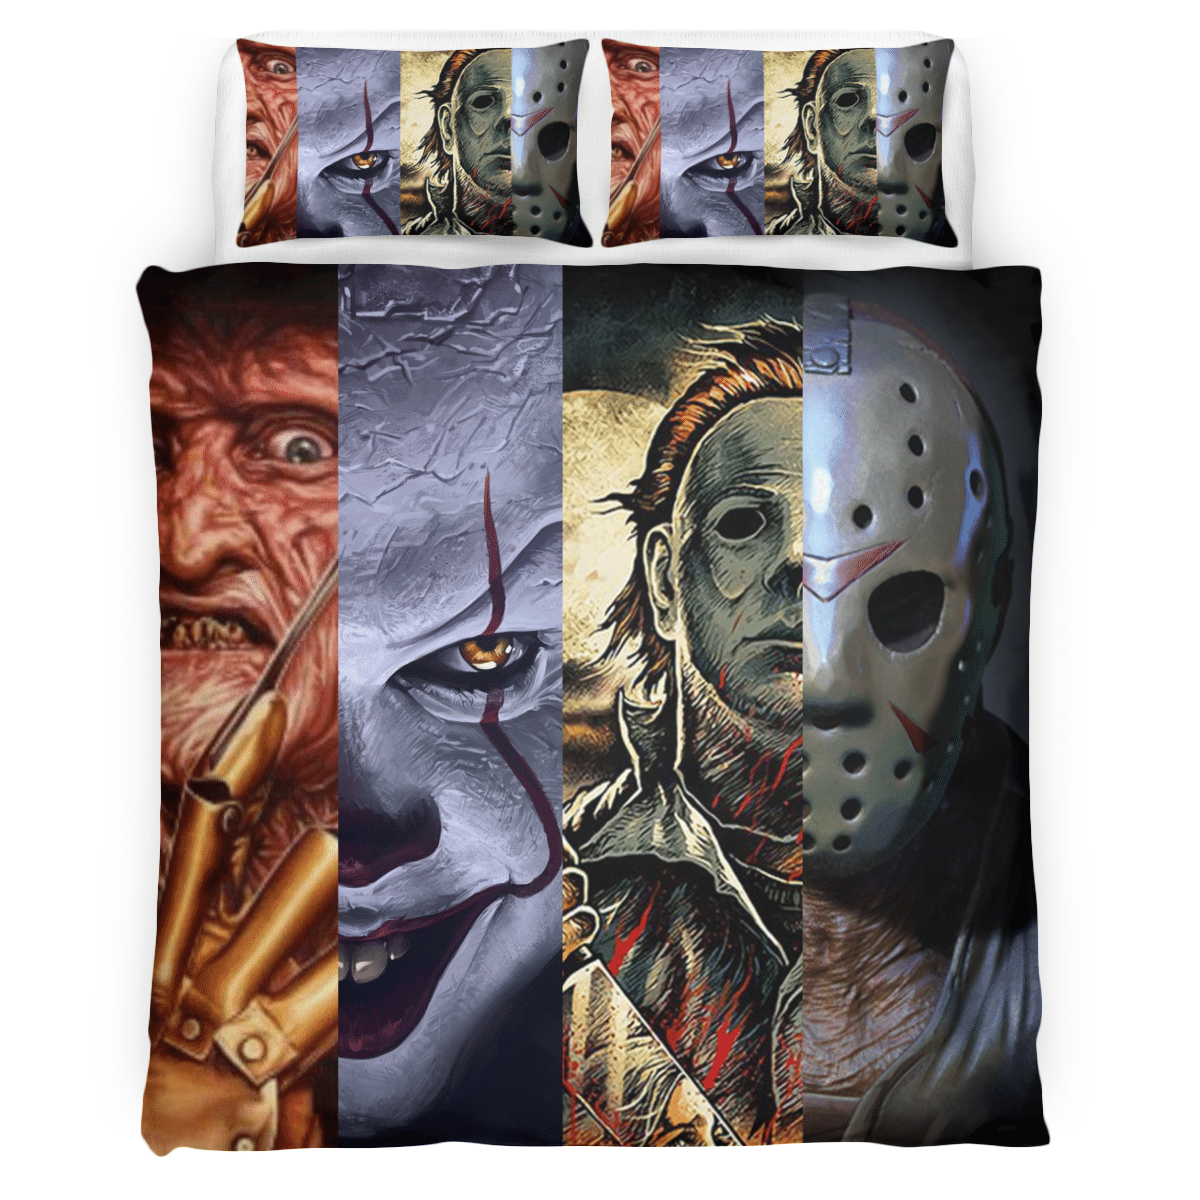 Top Four Horror Guys bedding set